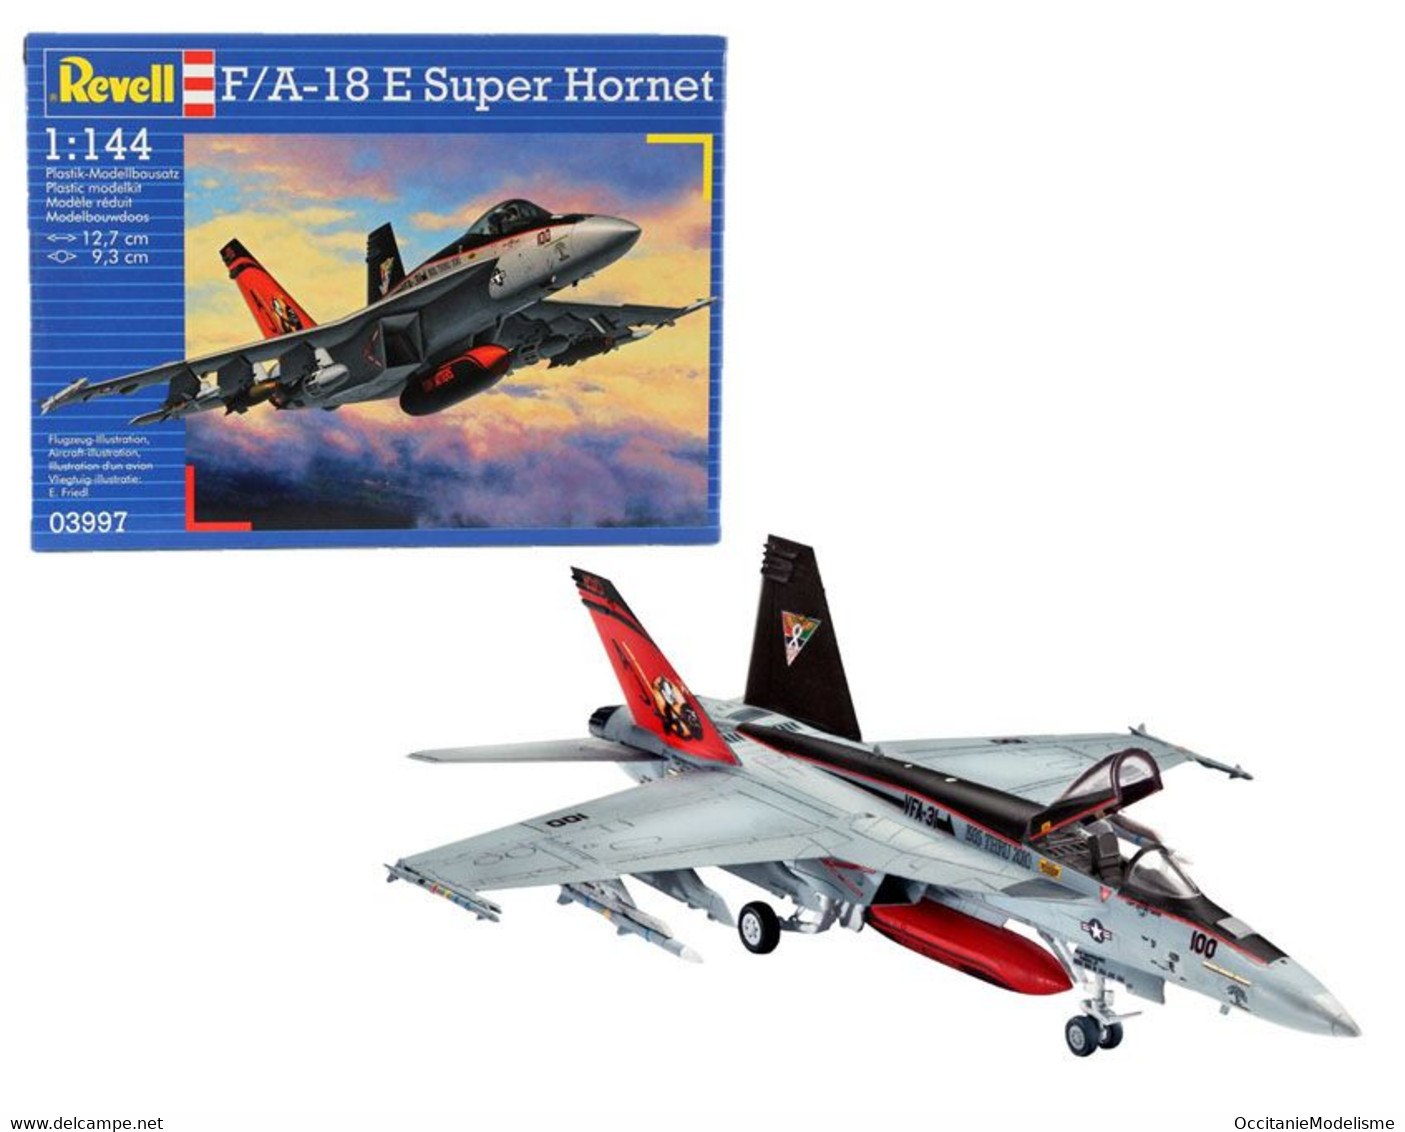 Revell - F/A-18 E Super Hornet US Navy Maquette Avion Kit Plastique Réf. 03997 Neuf NBO 1/144 - Vliegtuigen